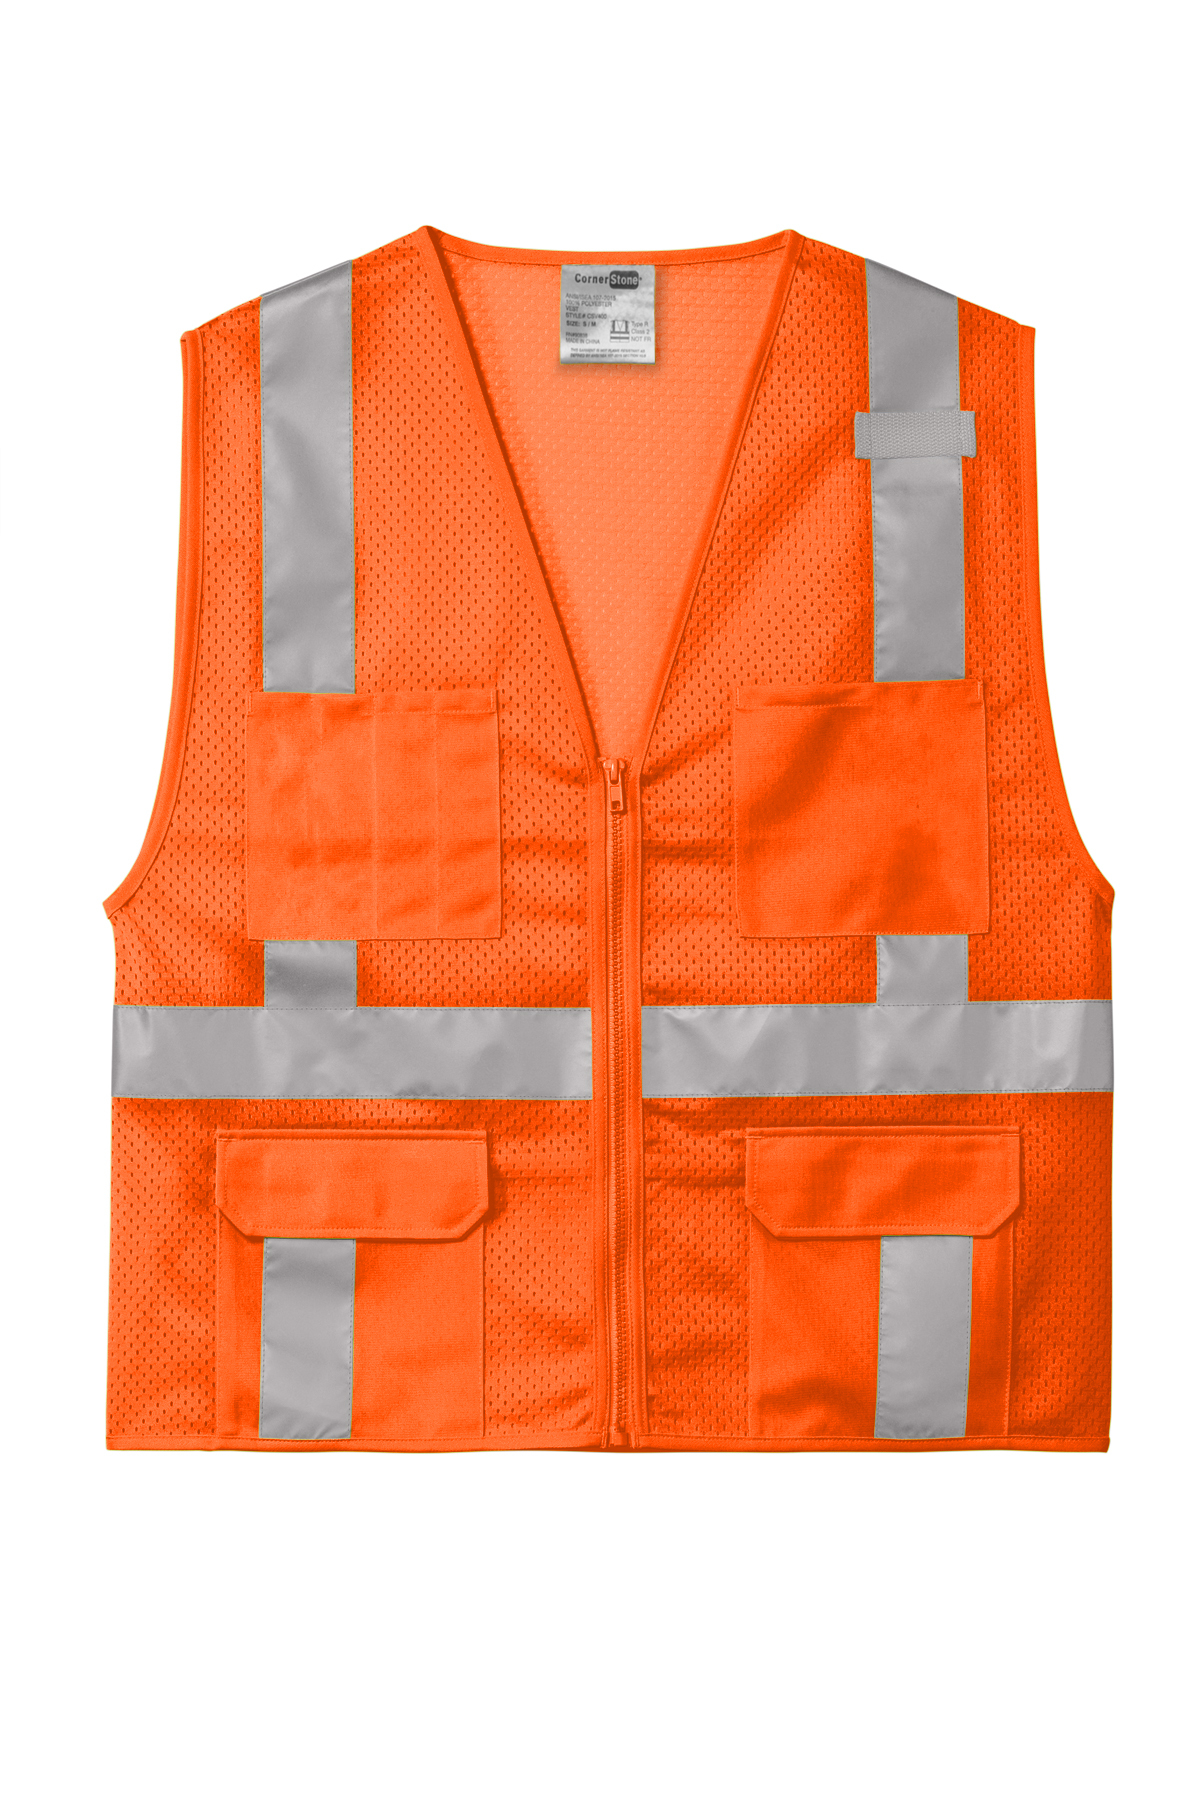 CornerStone ANSI 107 Class 2 Mesh Six-Pocket Zippered Vest